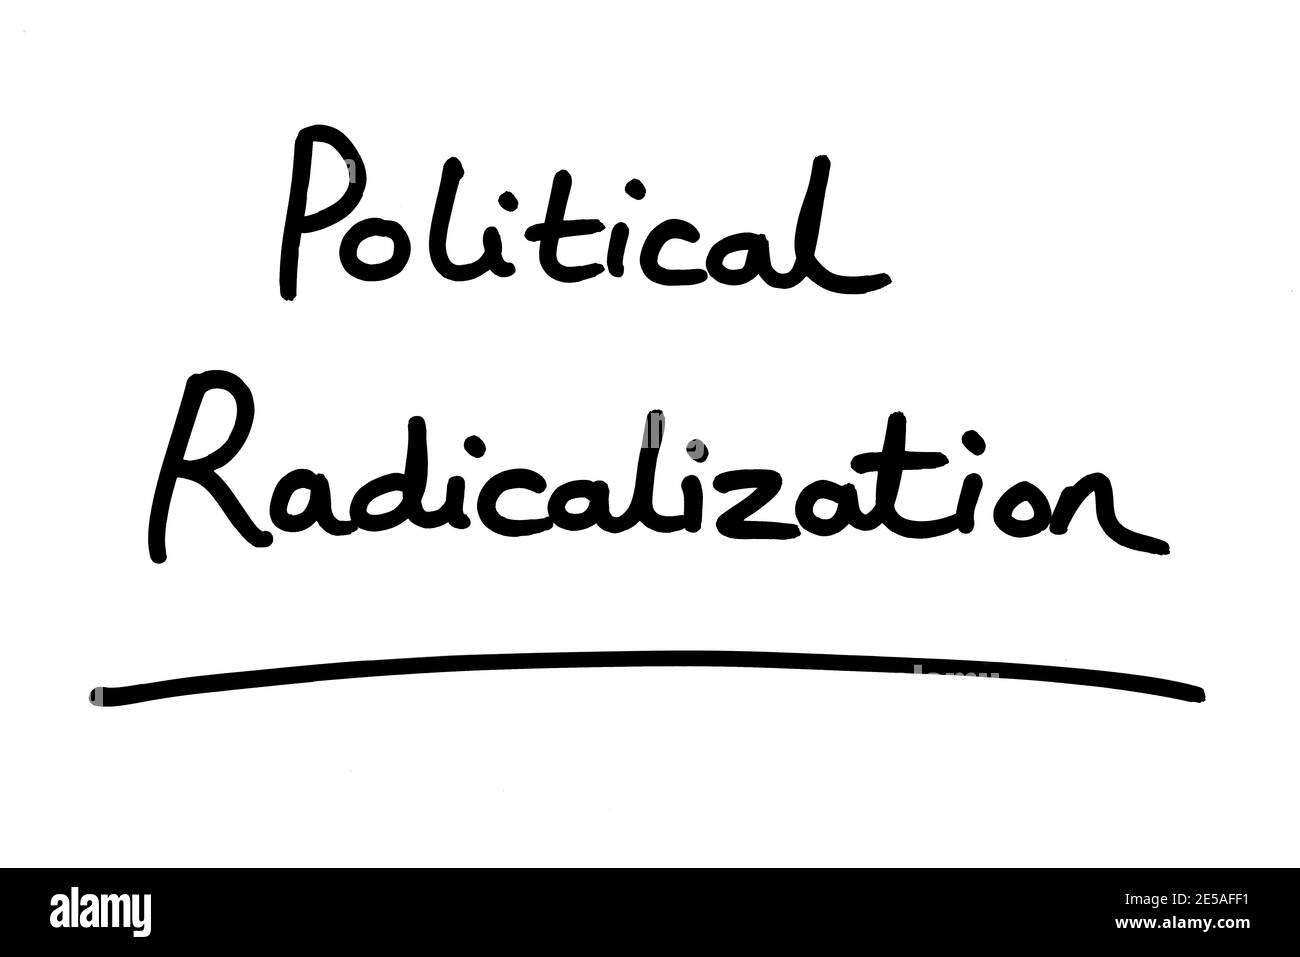 Political Radicalization, handwritten on a white background. Stock Photo